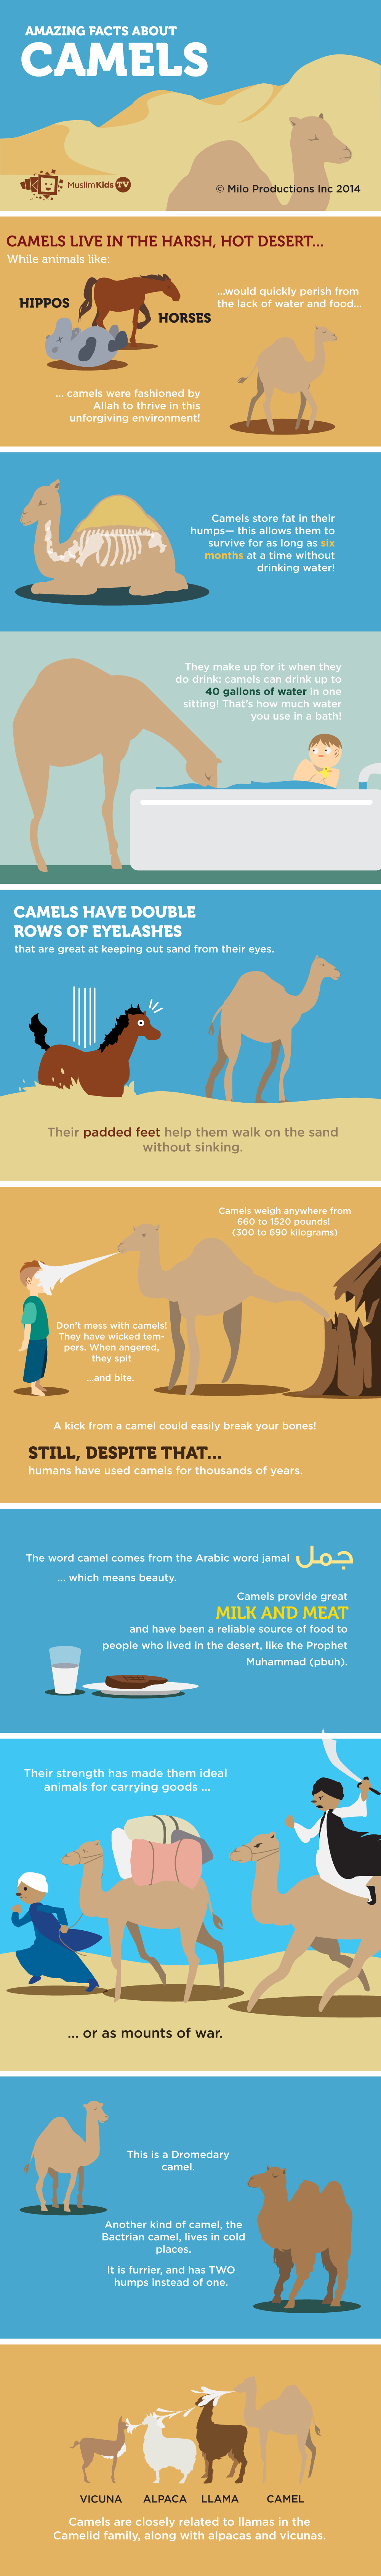 camel-info.png